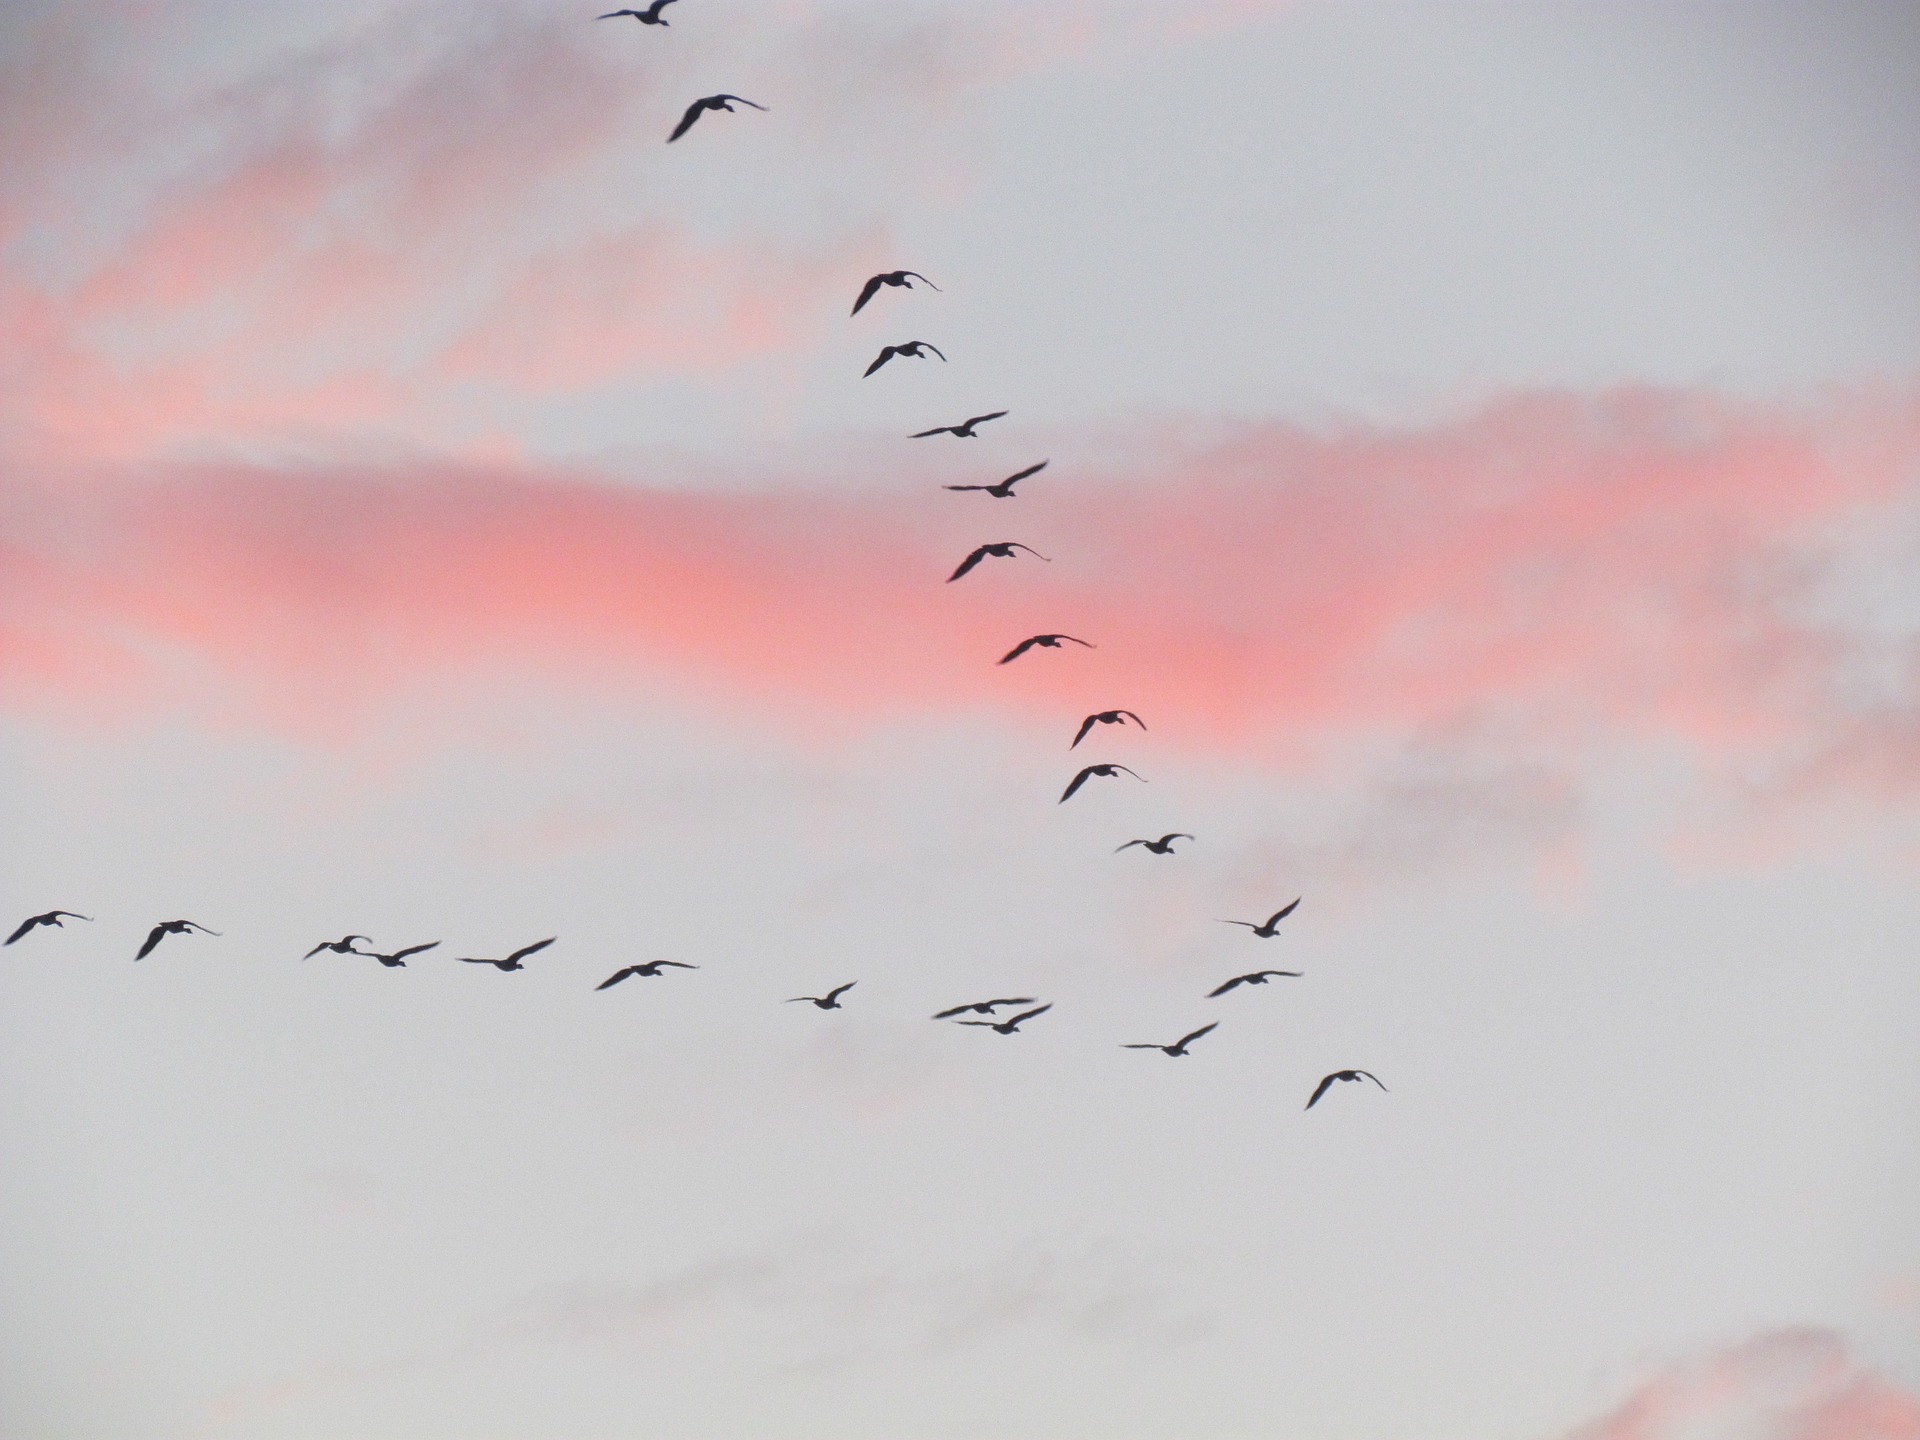 migrating birds in a rosy sky